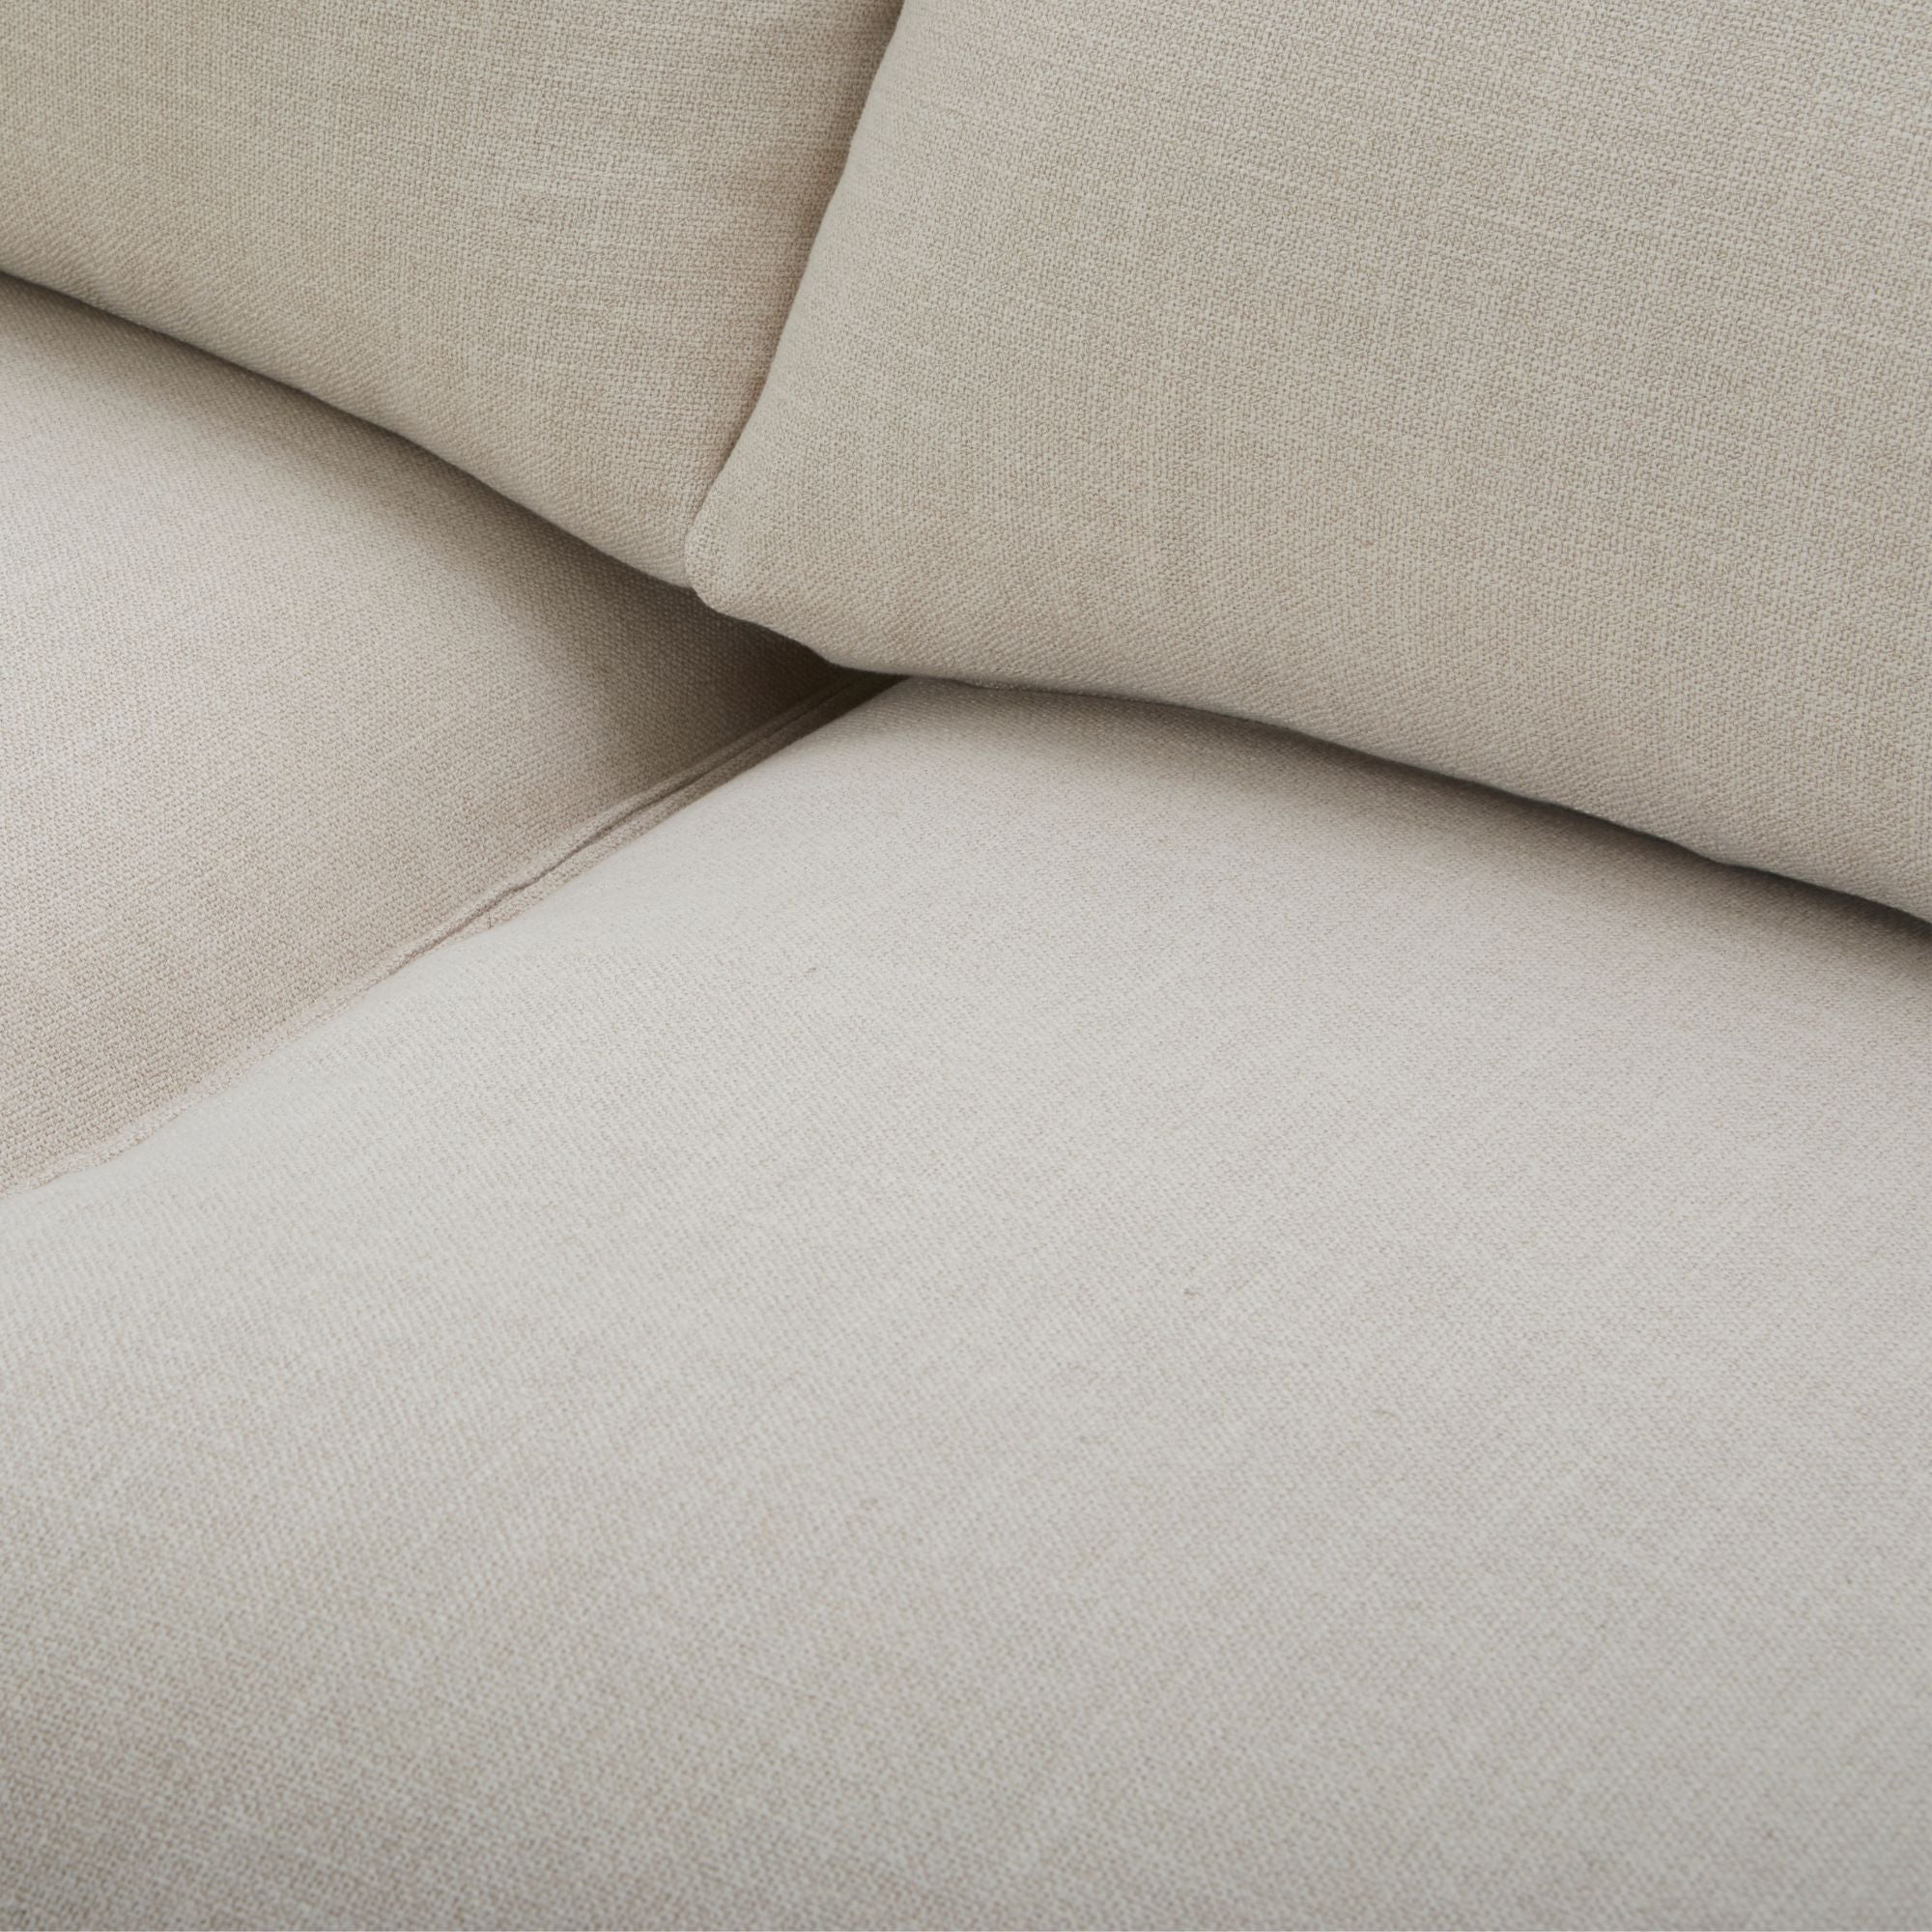 Plushy 2 Seater Sofa Fabric Uplholstered Lounge Couch - Stone